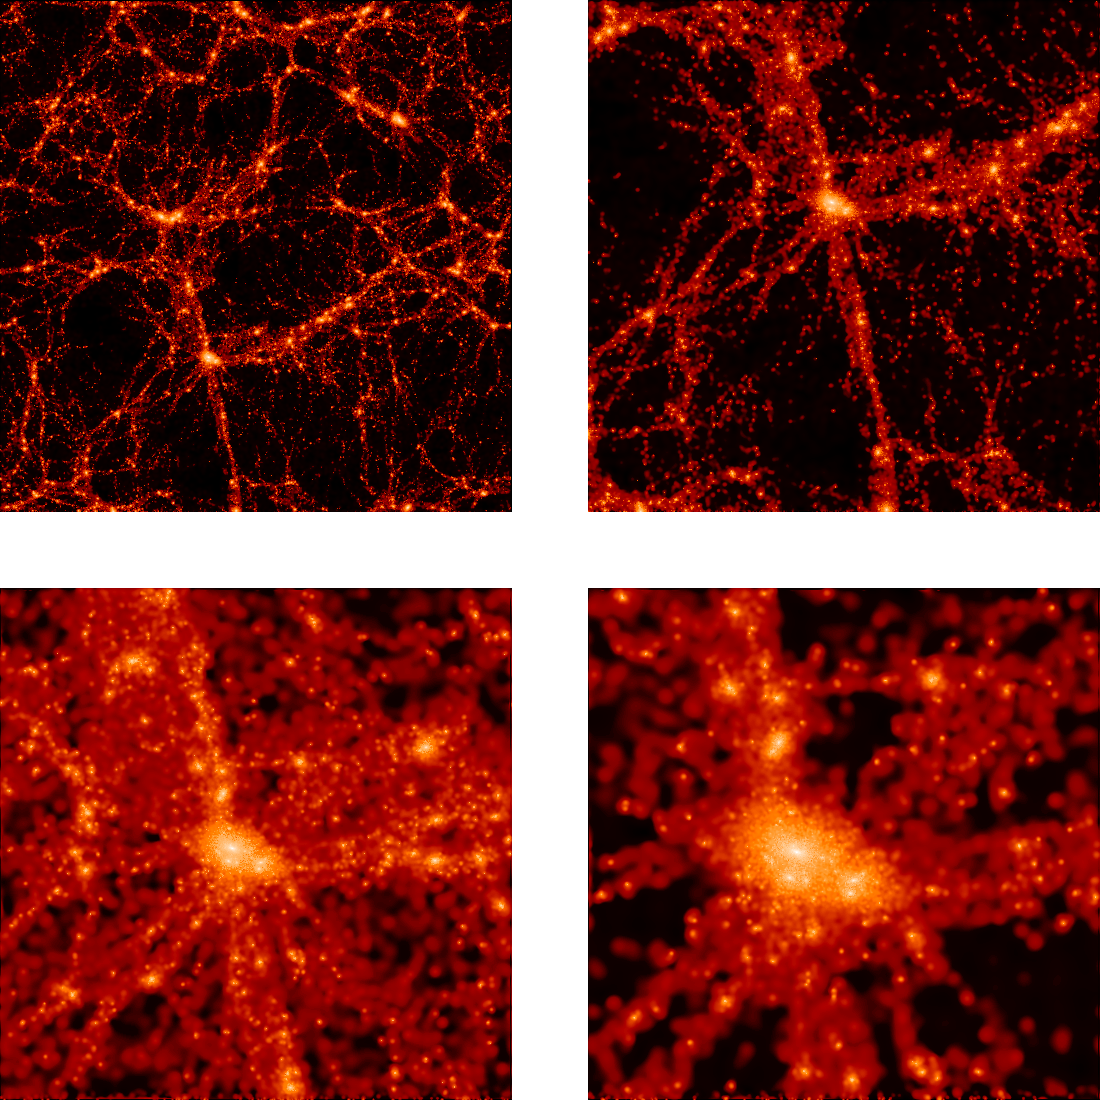 Dark matter distribution of GIF